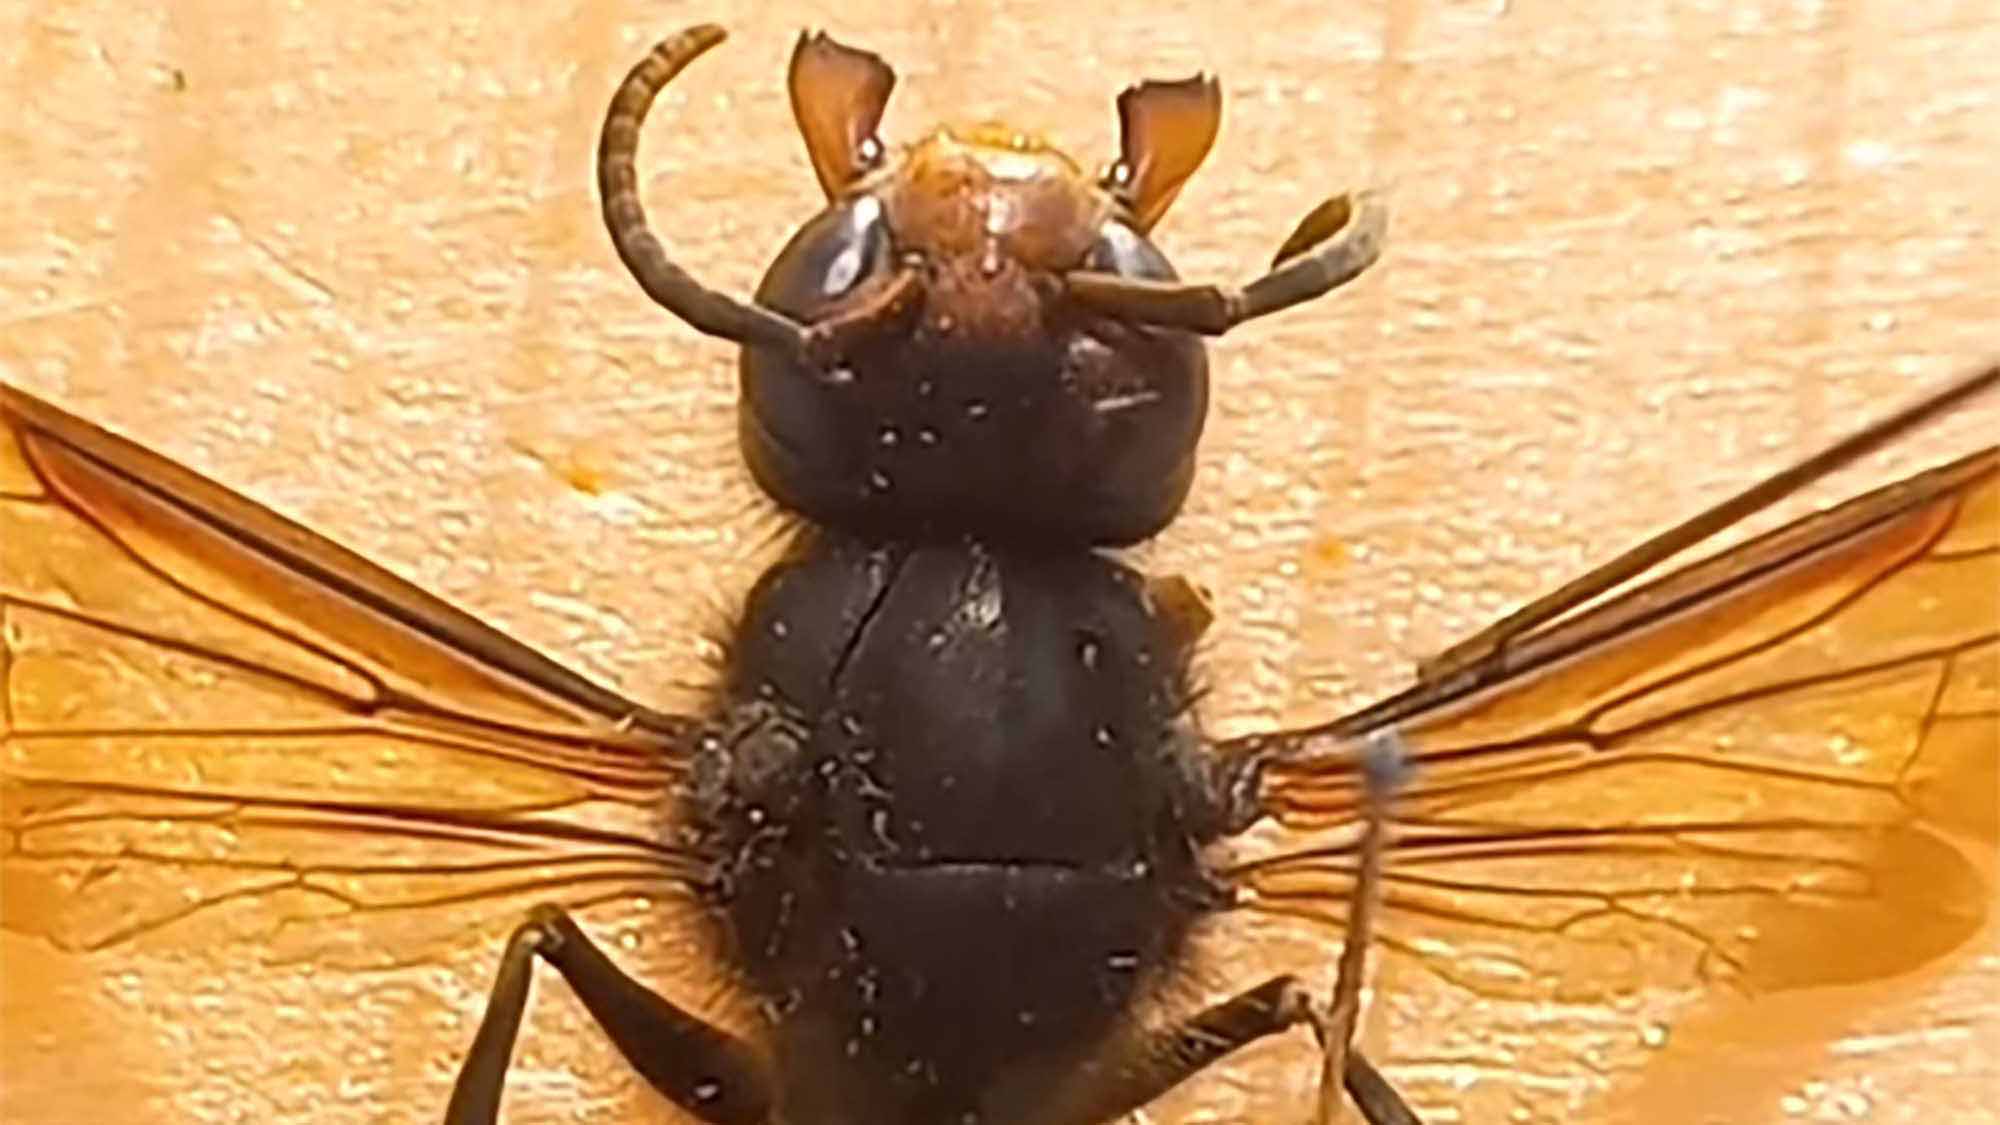 Cologne Beekeeper Issues Asian Hornet Alert